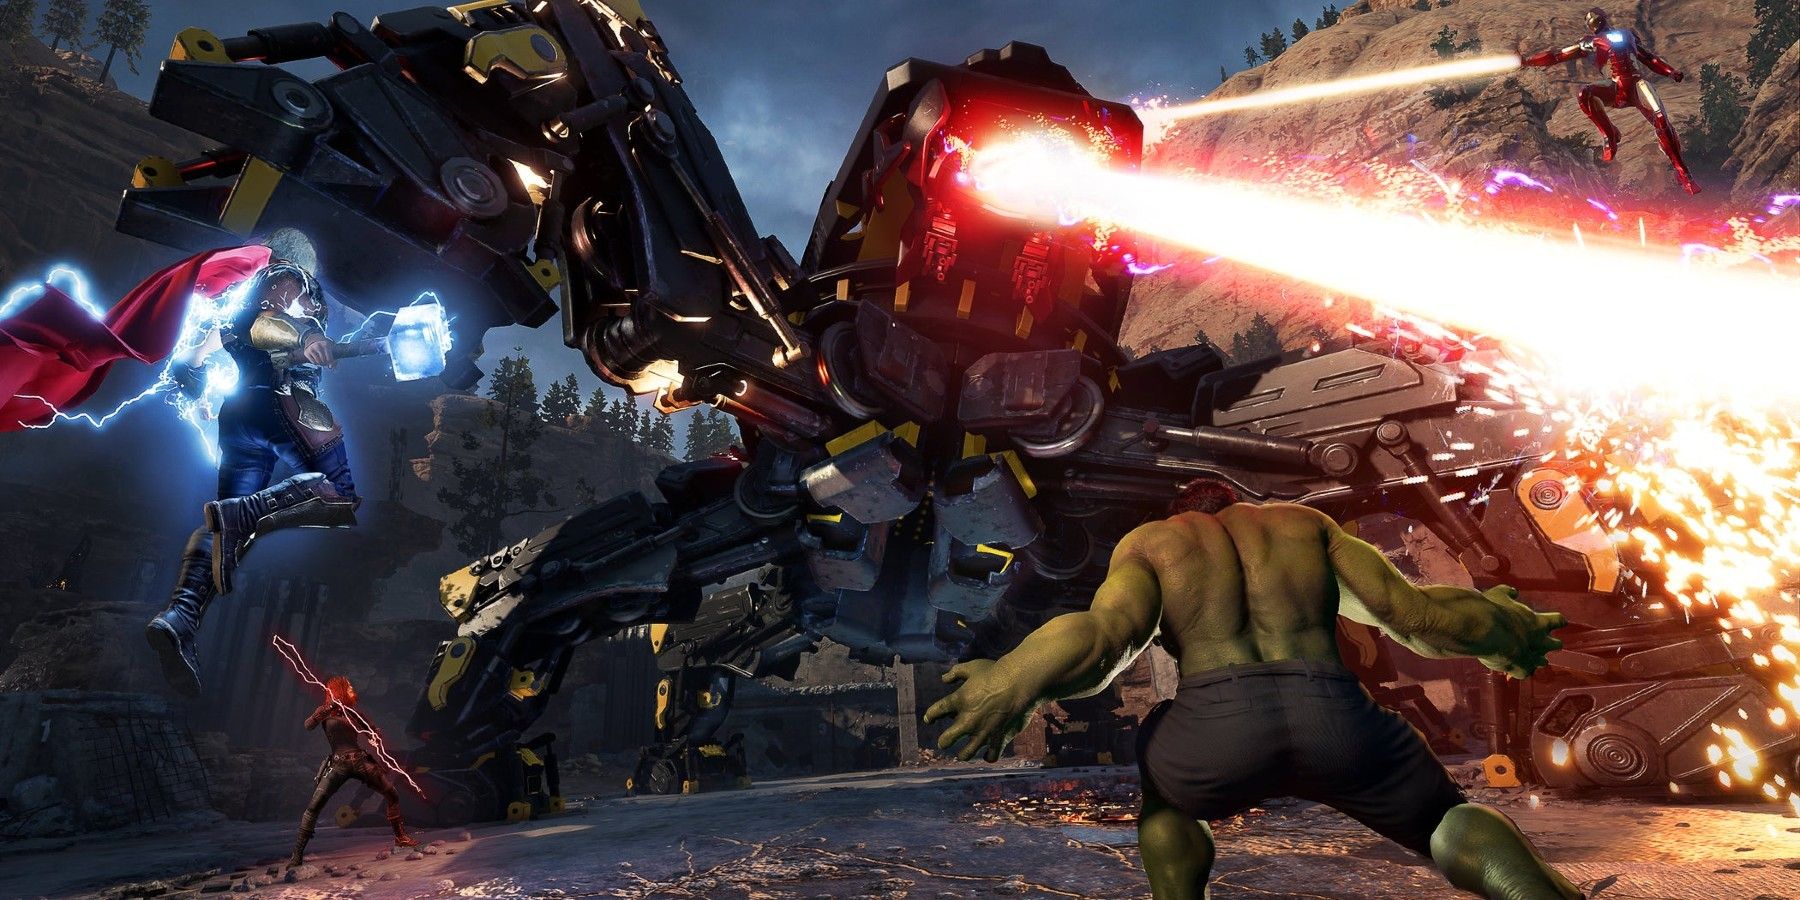 Marvel's Avengers Game sees Hulk fight a big bot